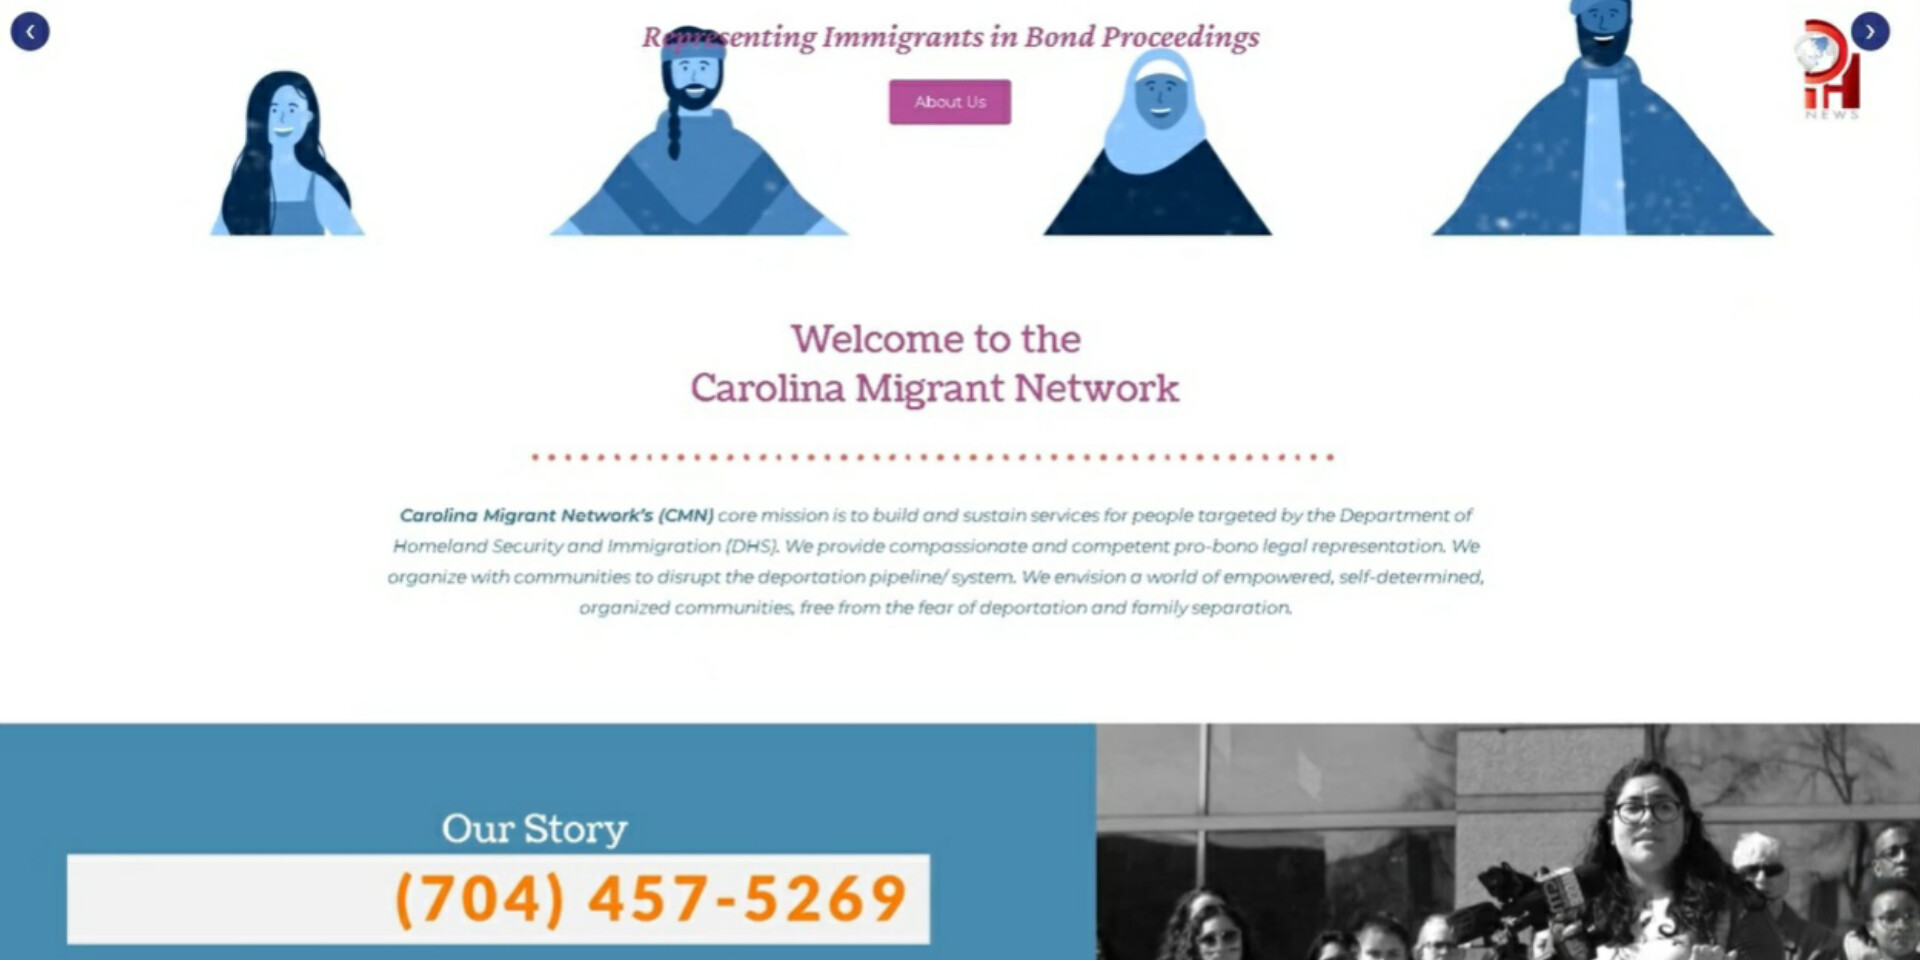 organizacion-busca-abogados-para-brindar-asistencia-a-inmigrantes-1